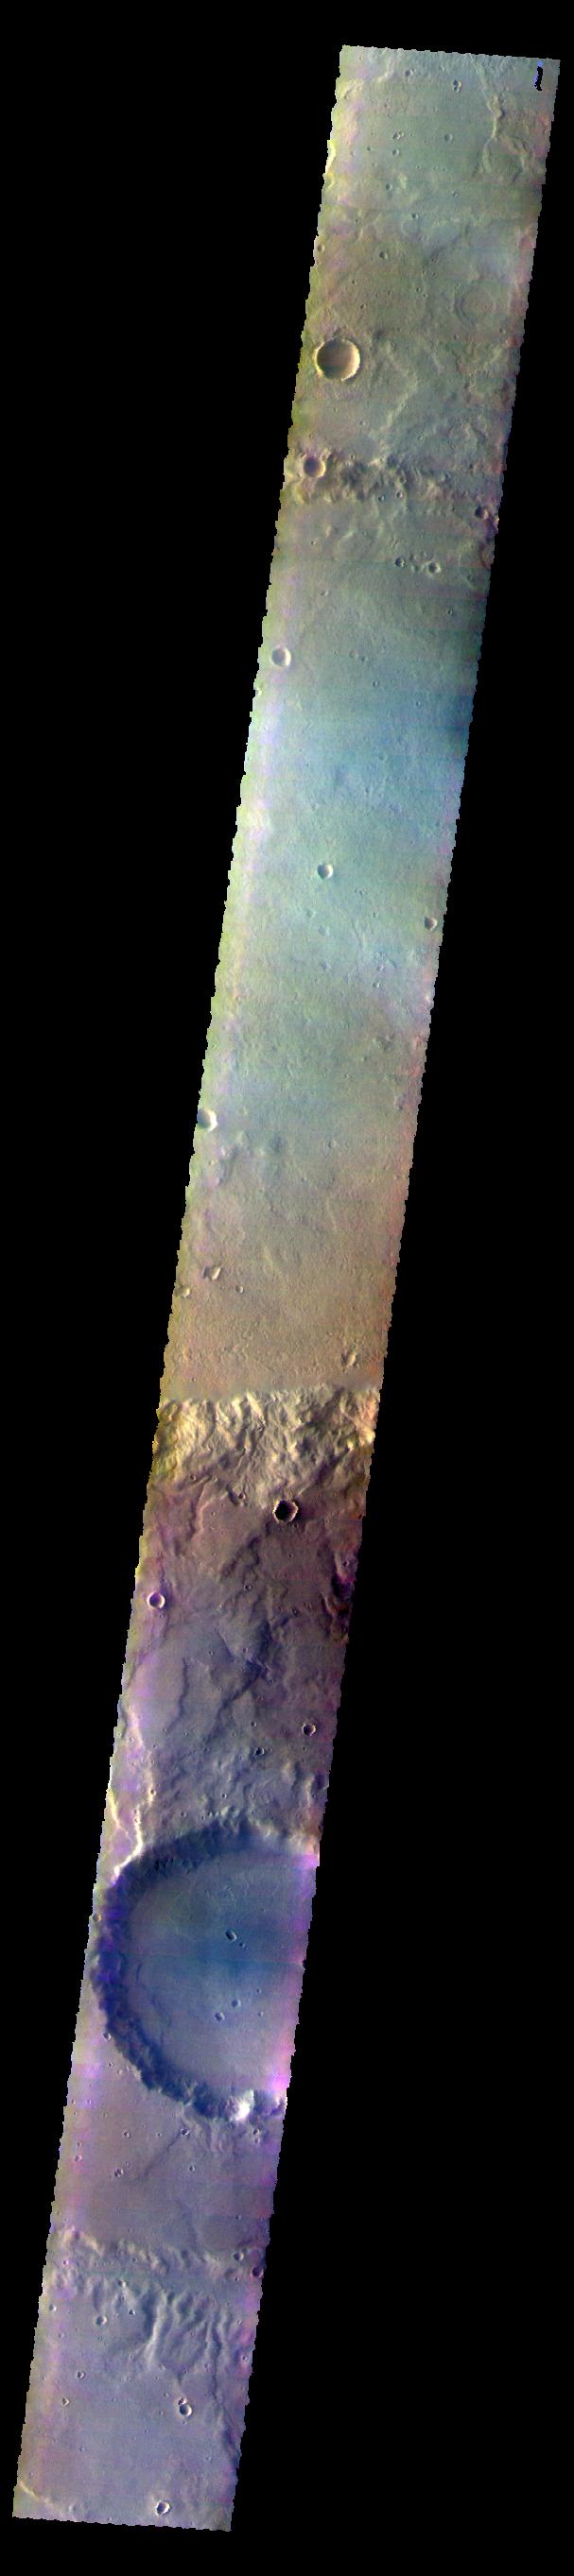 PIA22671: Terra Cimmeria - False Color